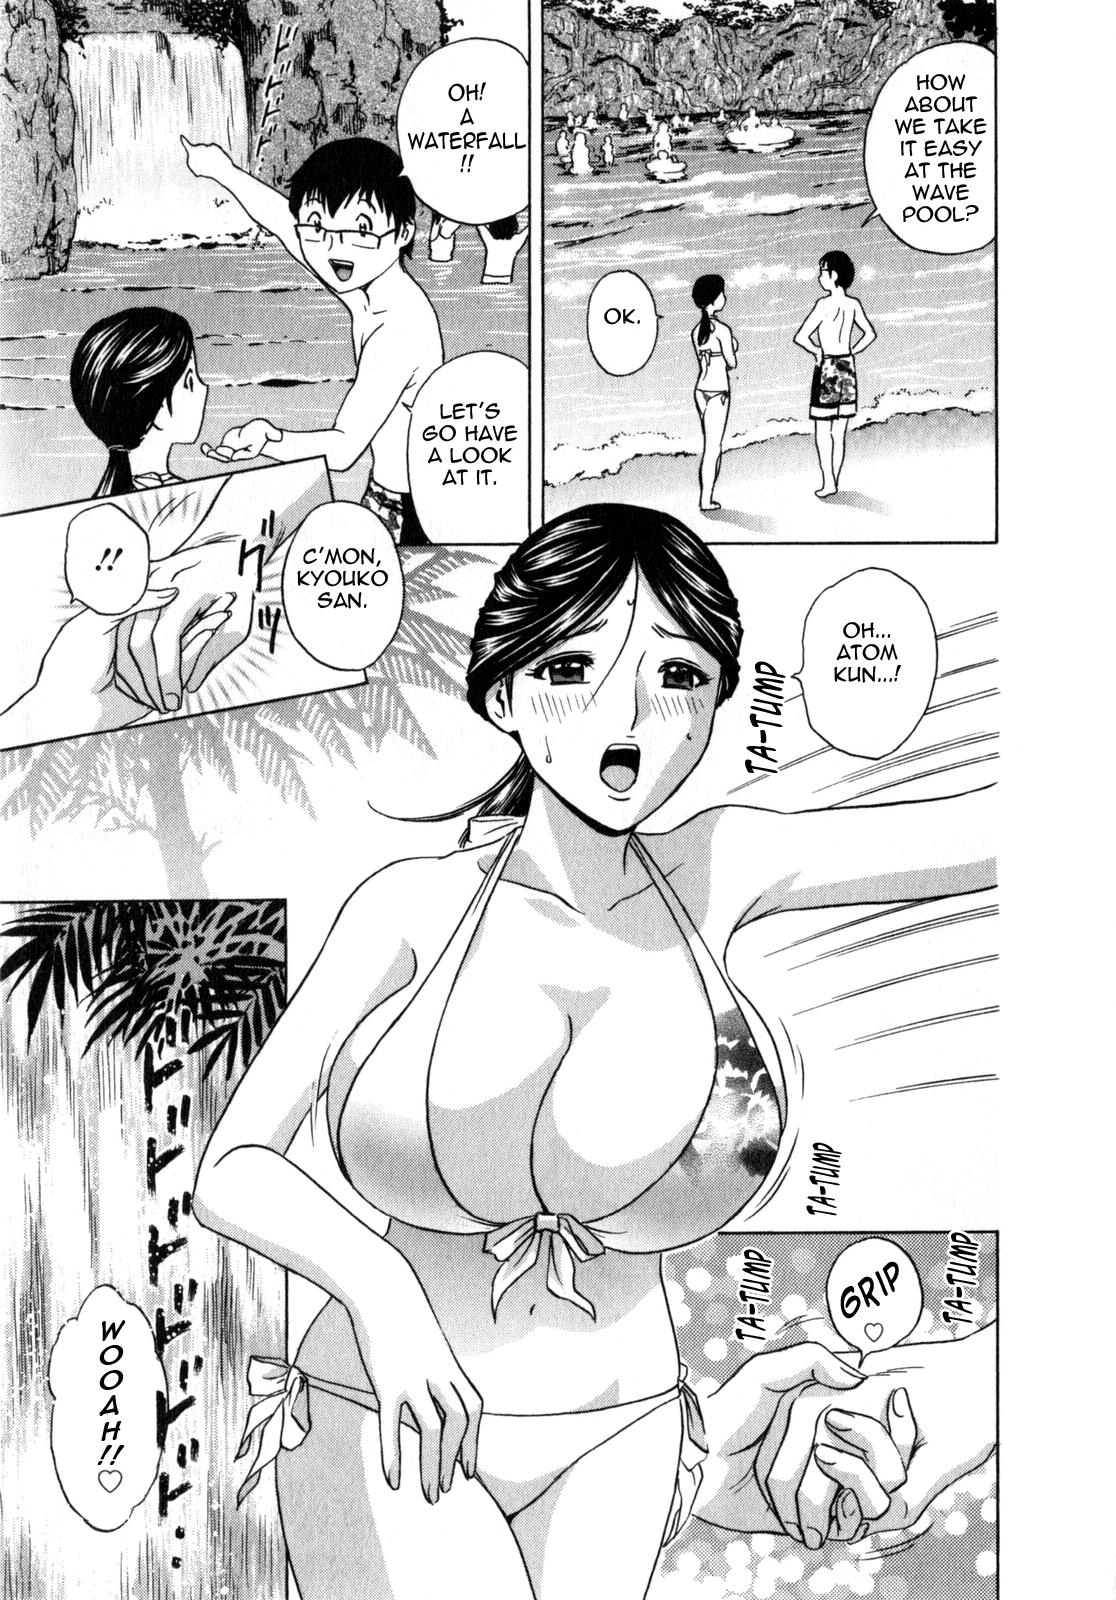 [Hidemaru] Life with Married Women Just Like a Manga 1 - Ch. 1-9 [English] {Tadanohito} 129